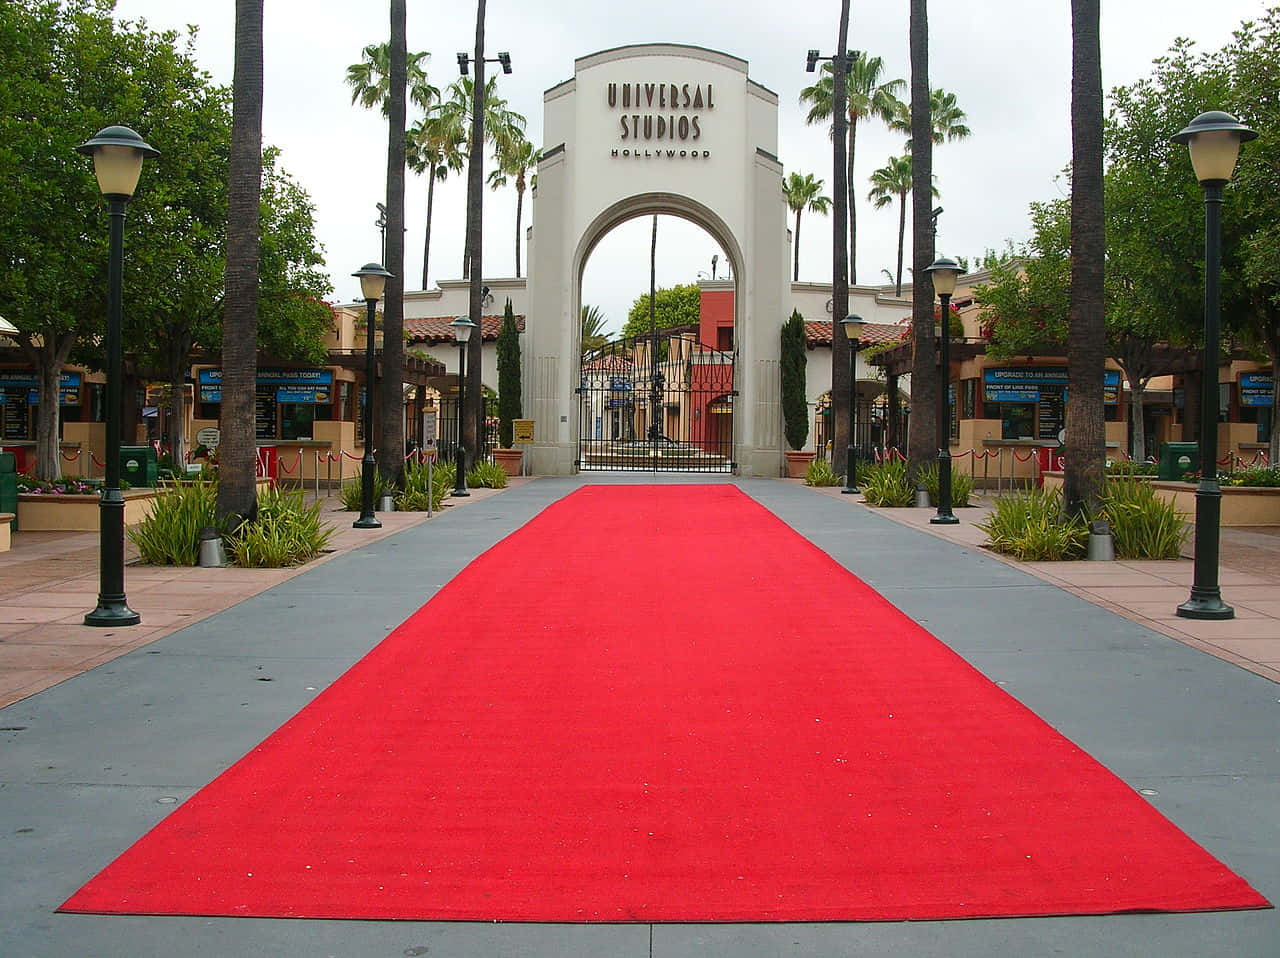 Roterteppich-eingang Hintergrund Universal Studios Hollywood